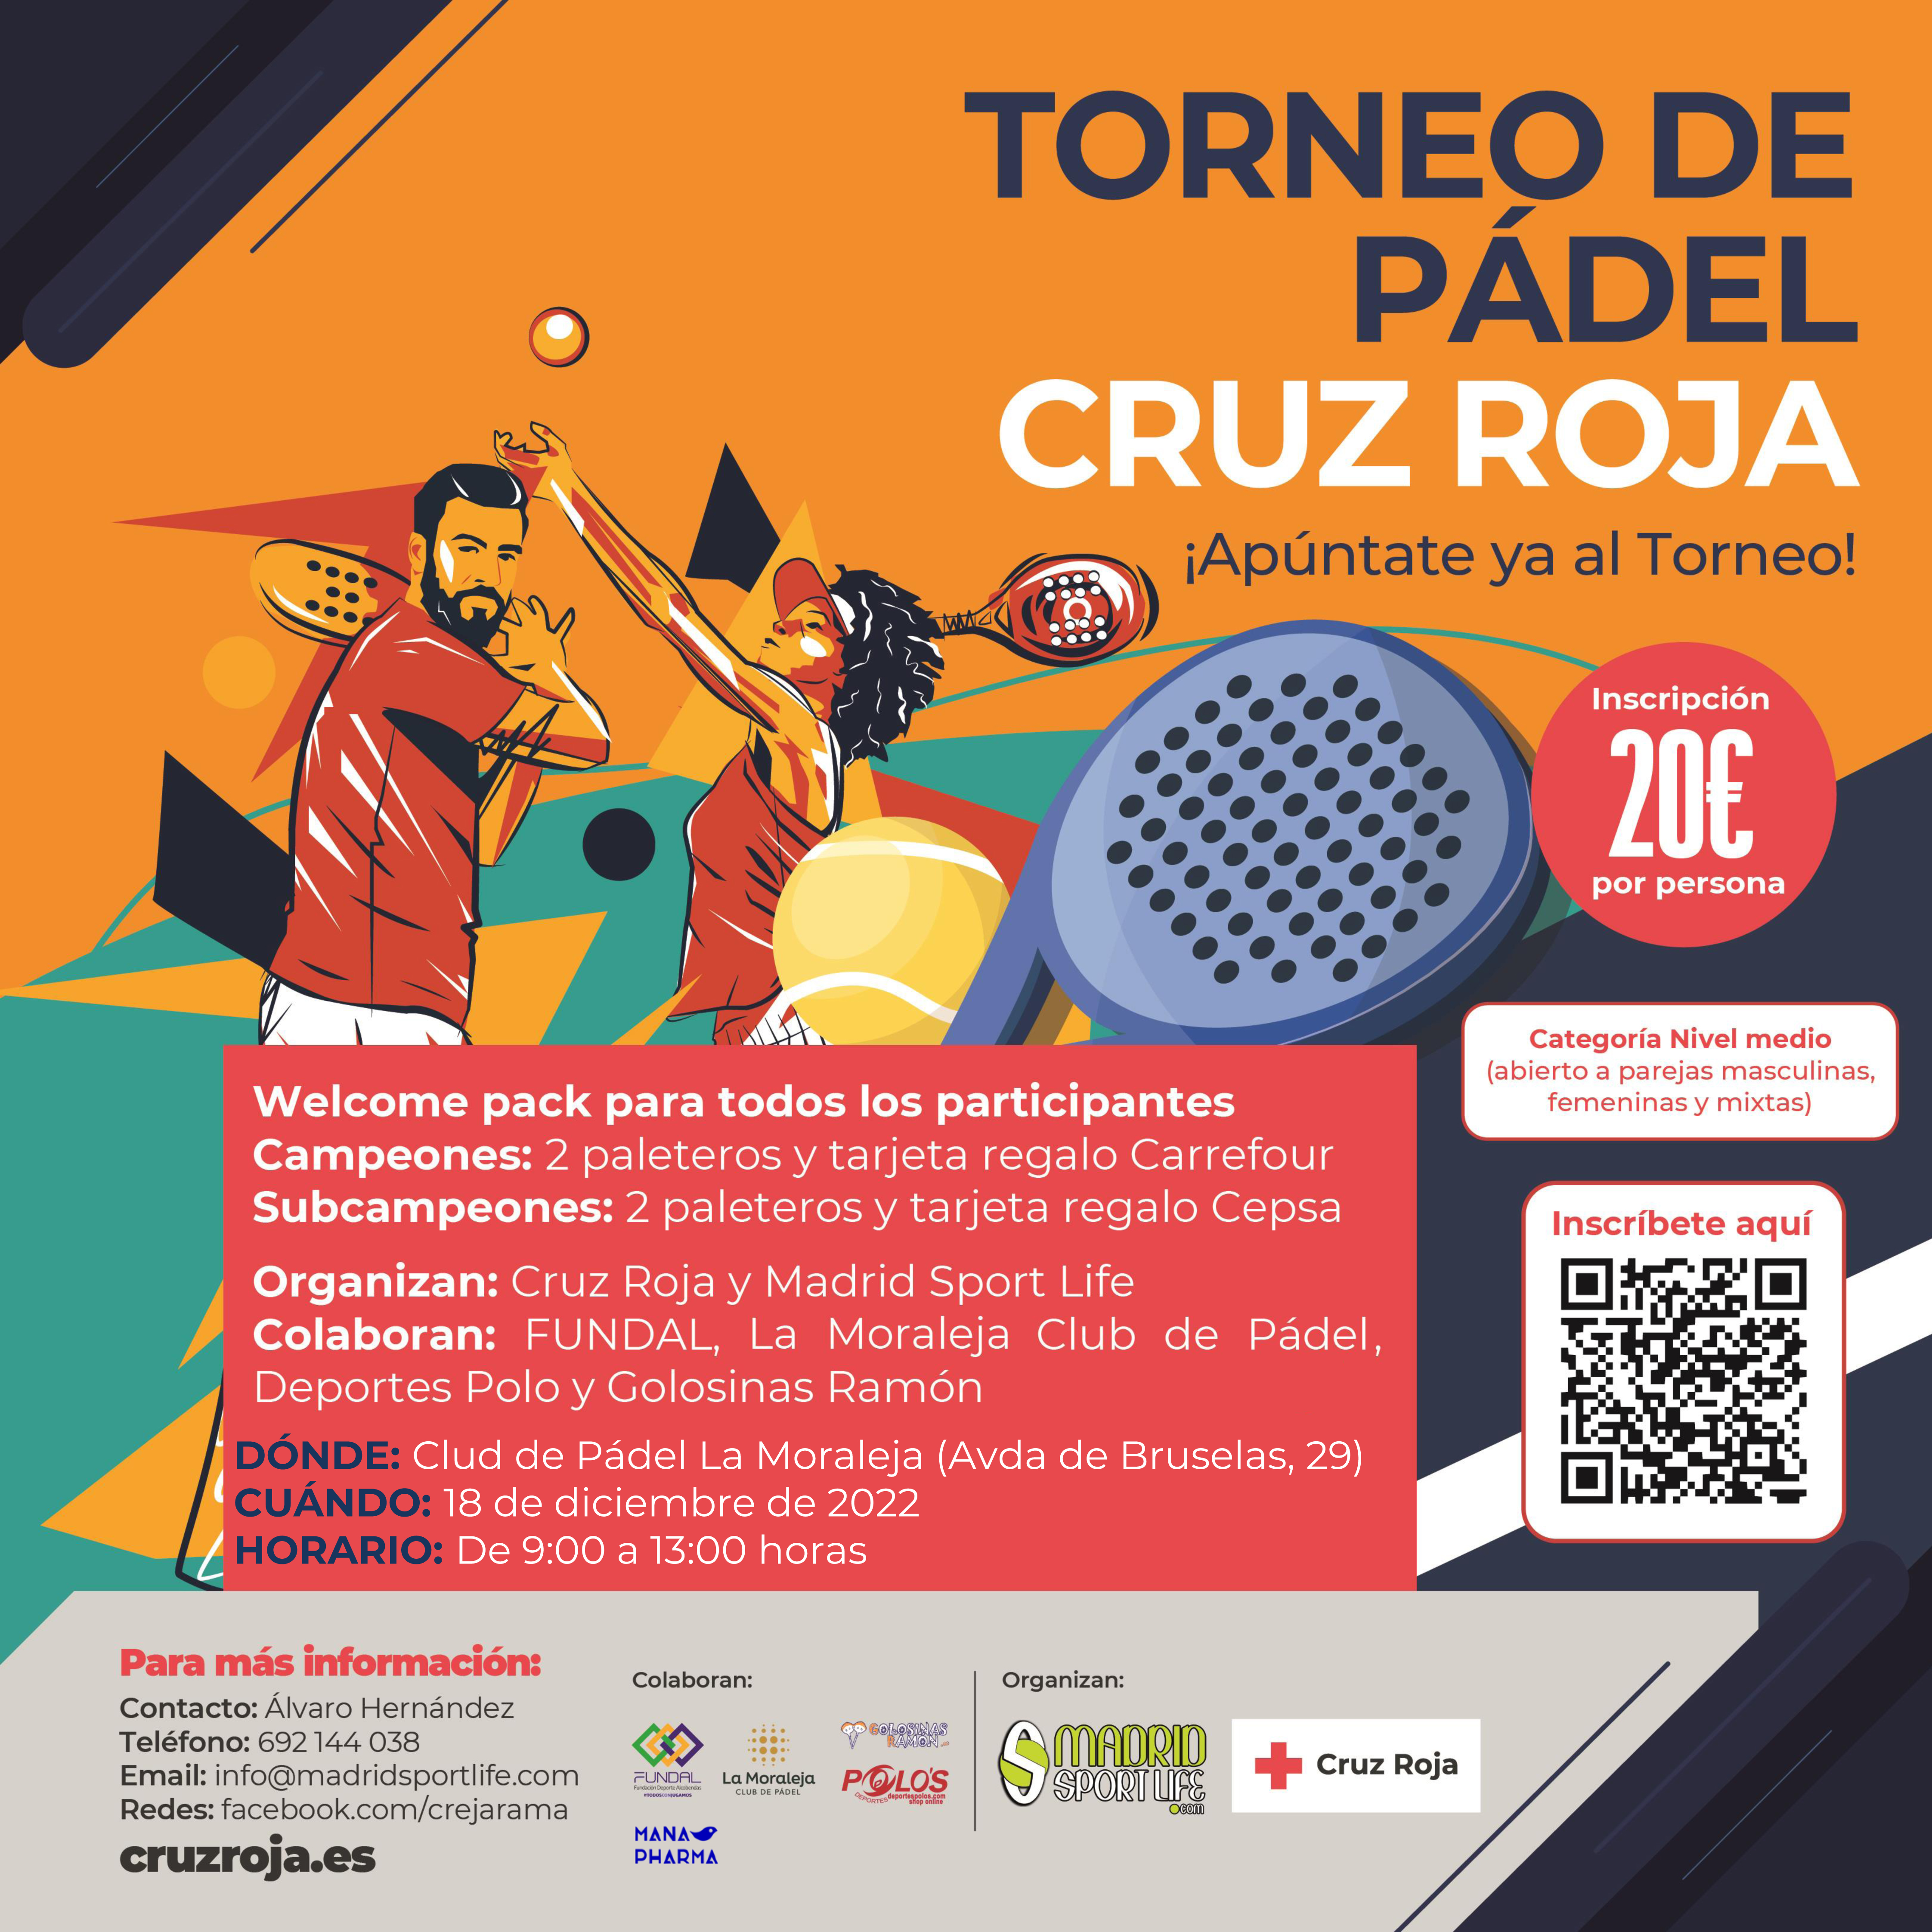 Torneo de Pádel Cruz Roja Madrid